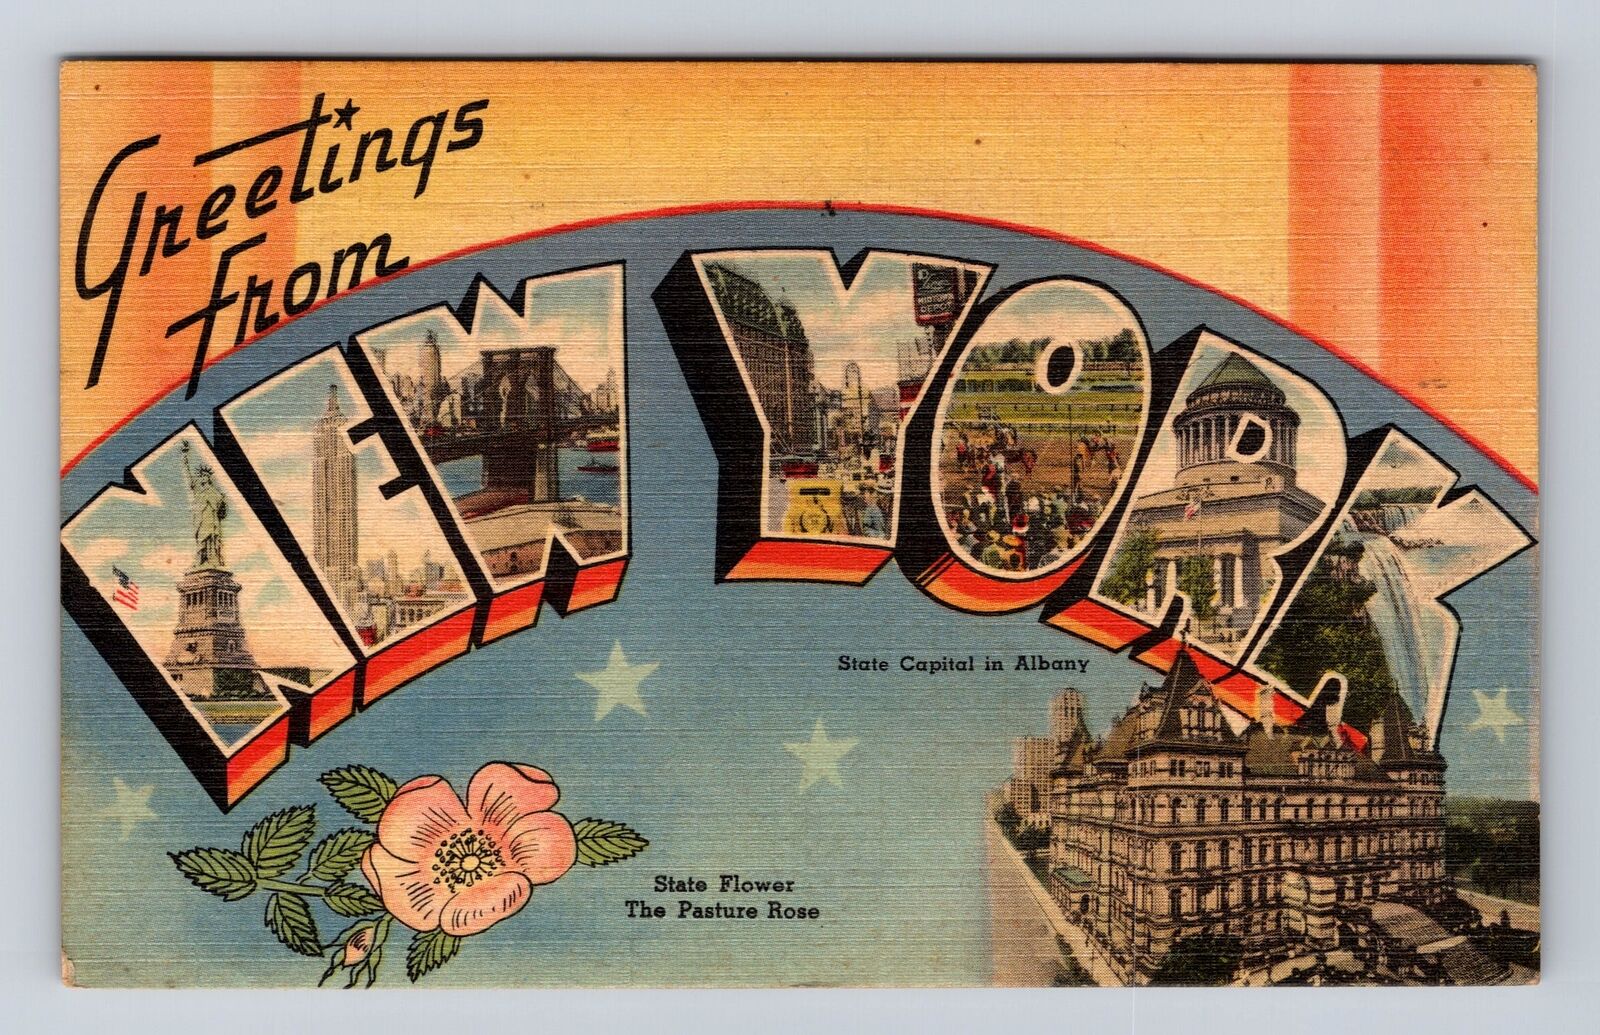 LARGE LETTER Greetings For New York, State Captiol, Vintage c1945 Postcard